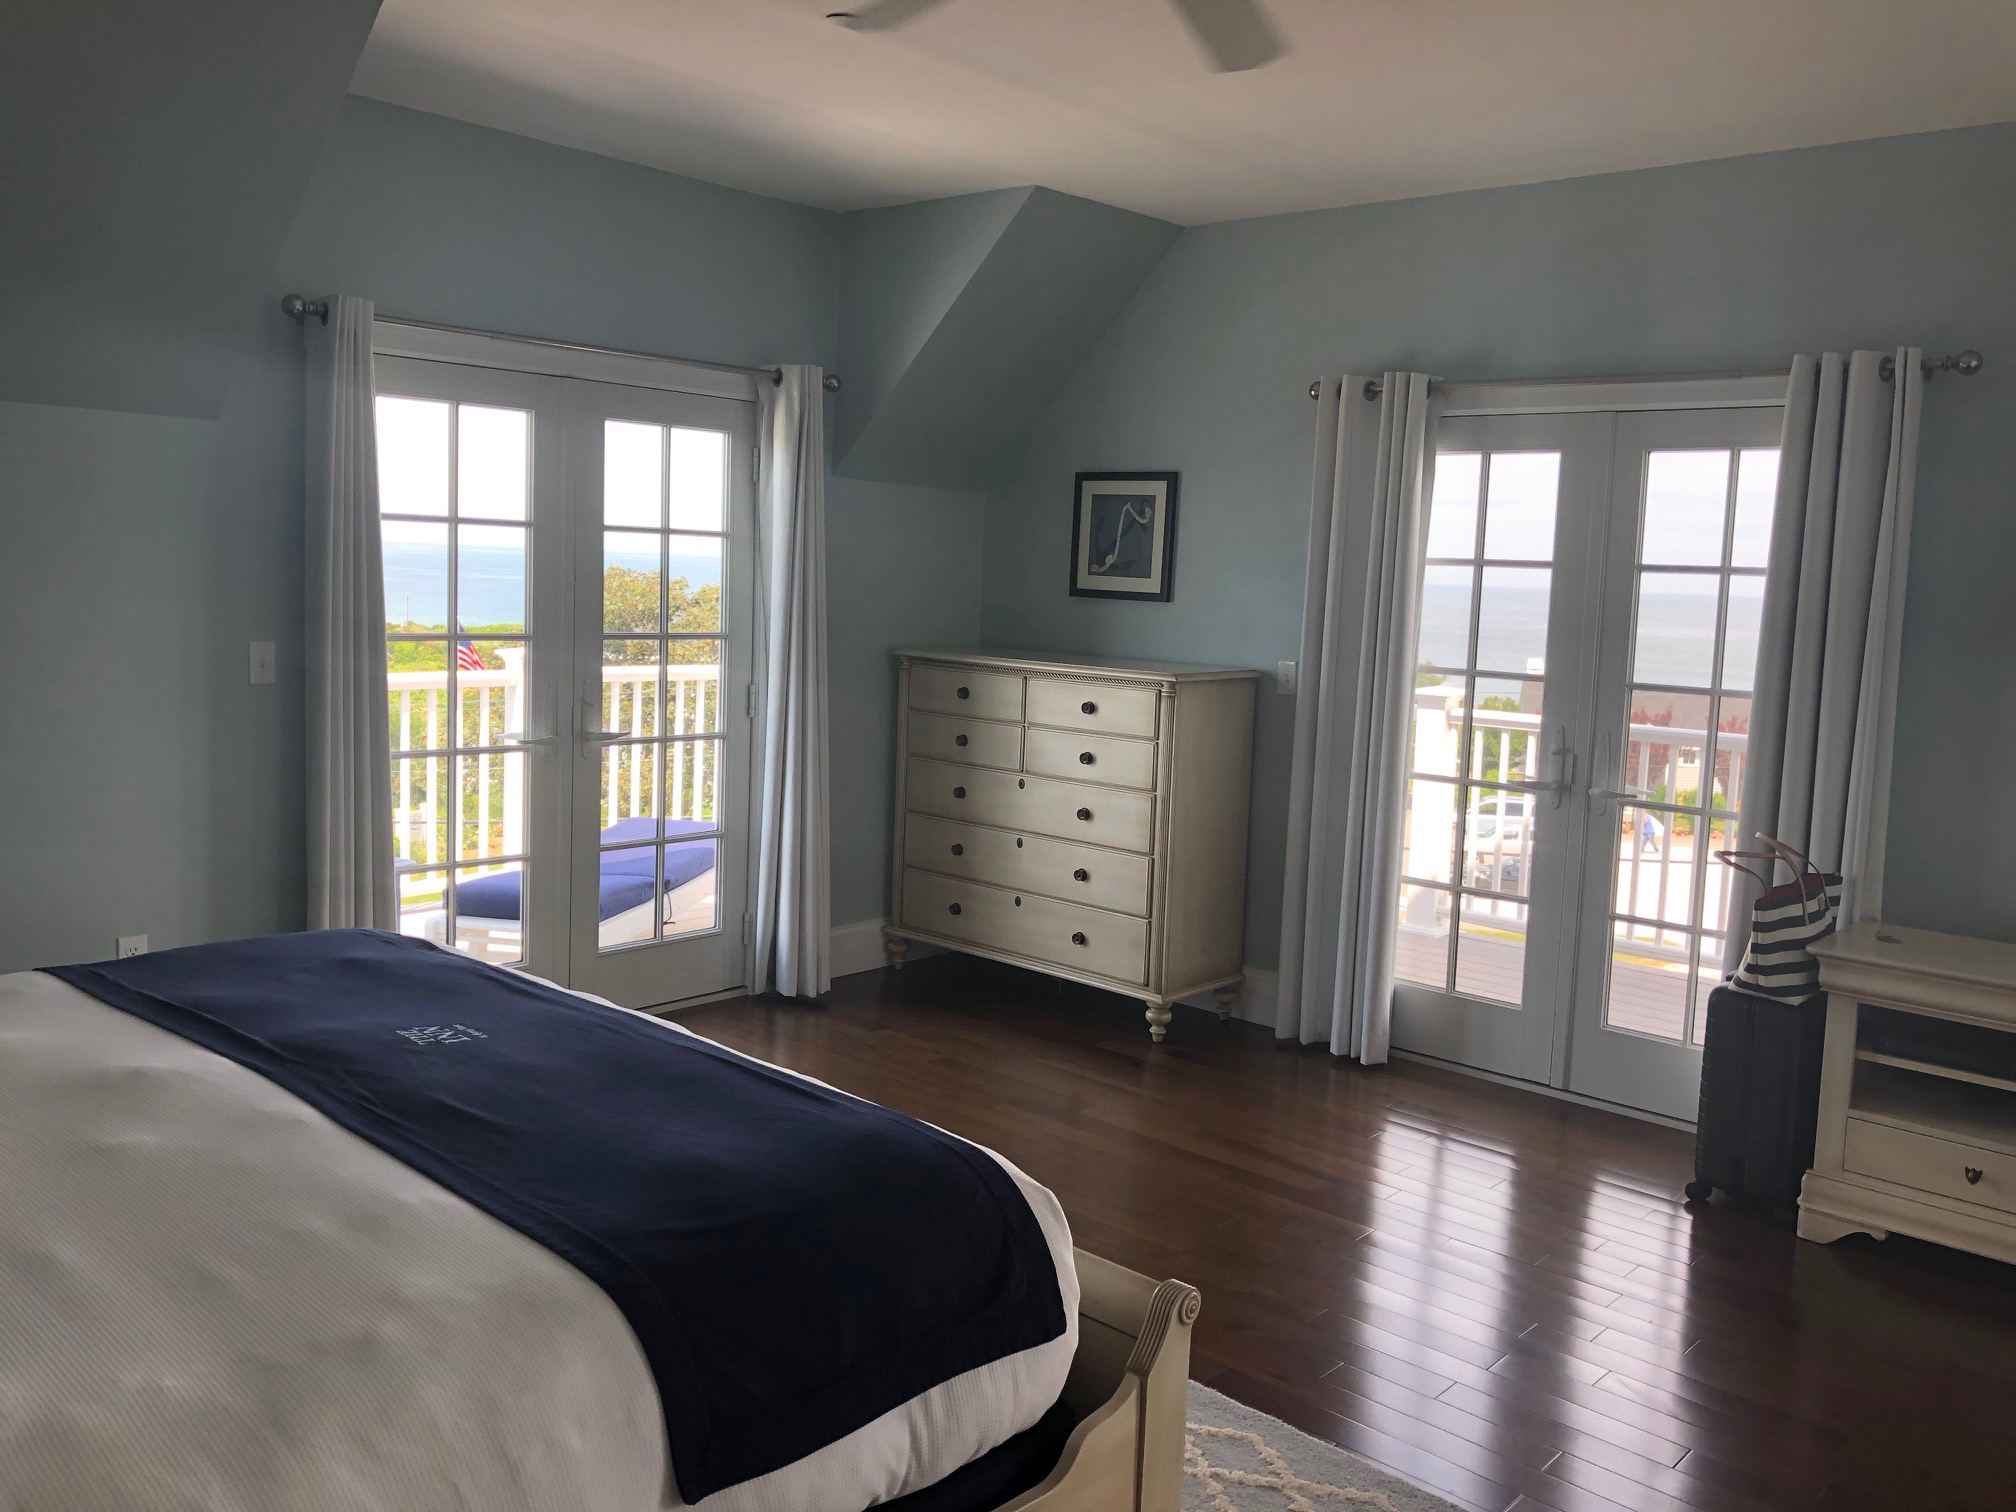 king corner hotel room in Block Island Rhode Island set in blue tones with two windows